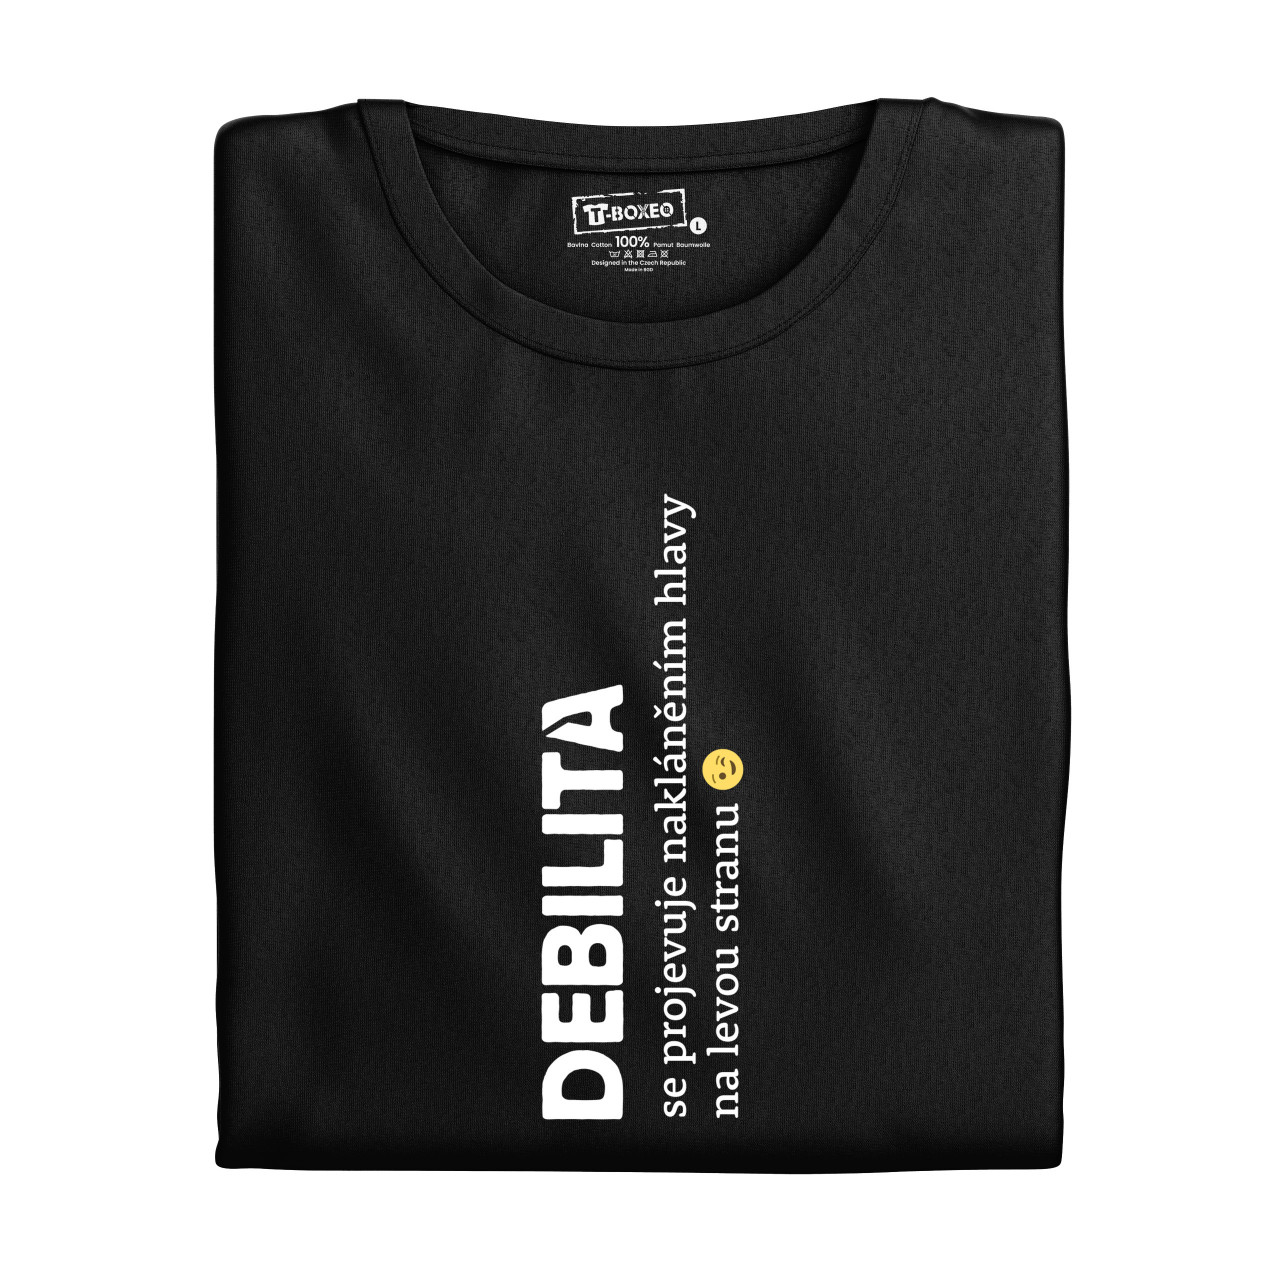 Dámské tričko s potiskem “Debilita”